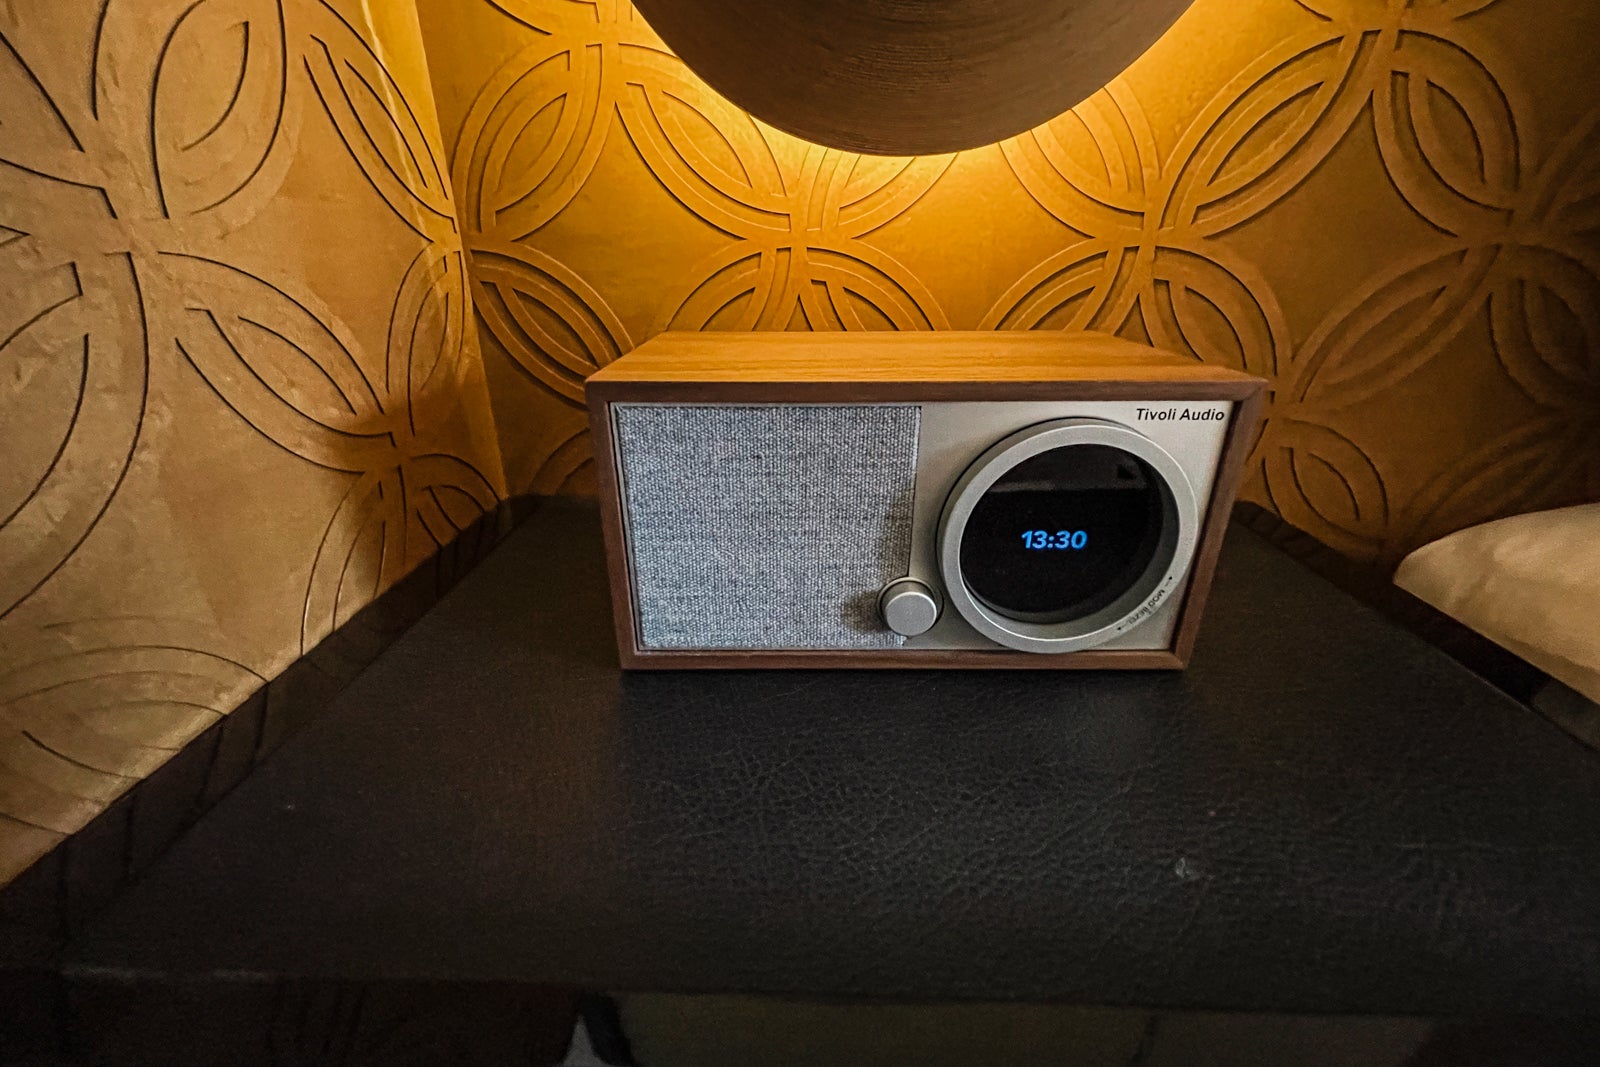 Bedside clock radio at The Ritz-Carlton, Kyoto in Japan